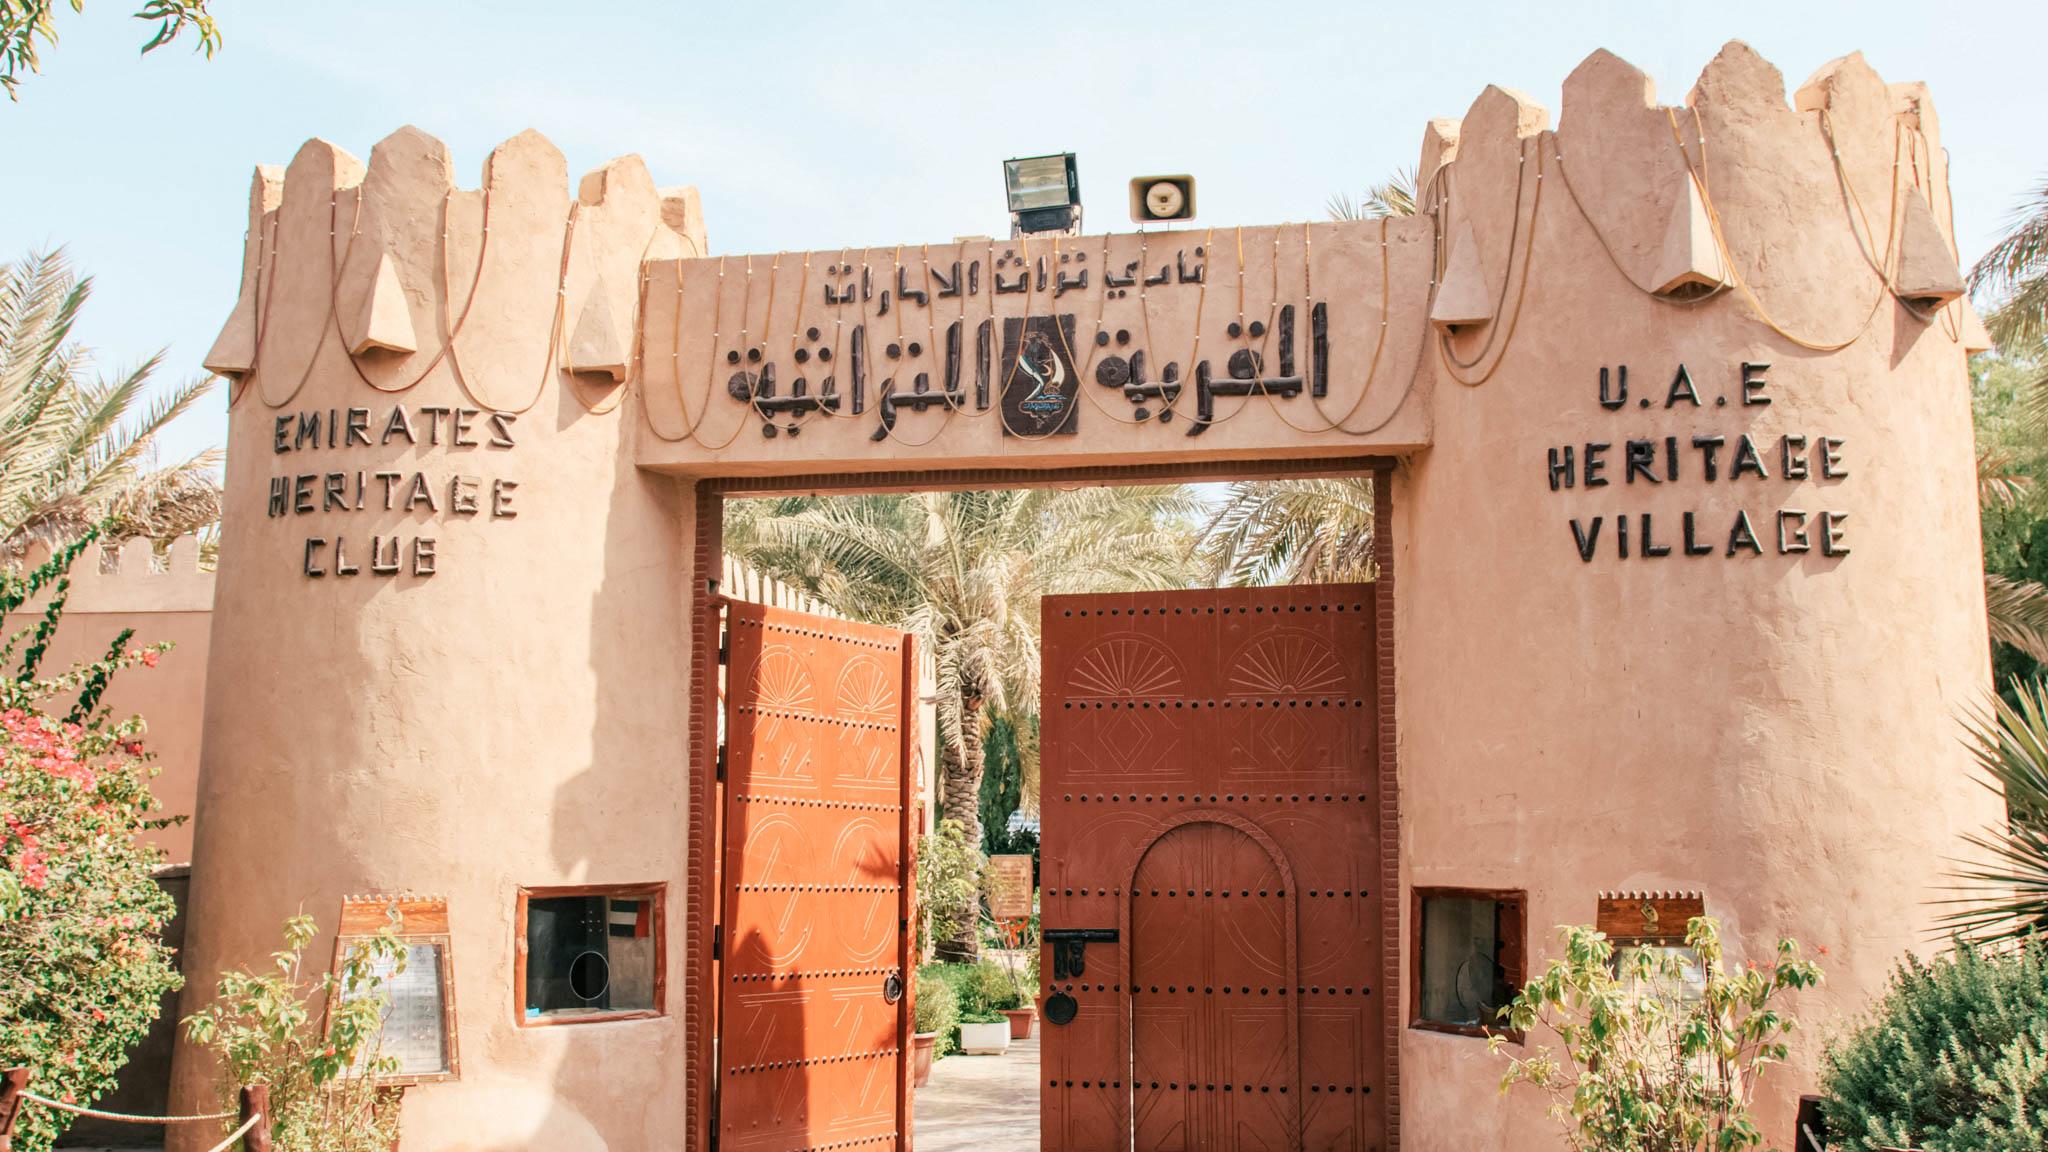 Emirates Heritage Club - Heritage Village